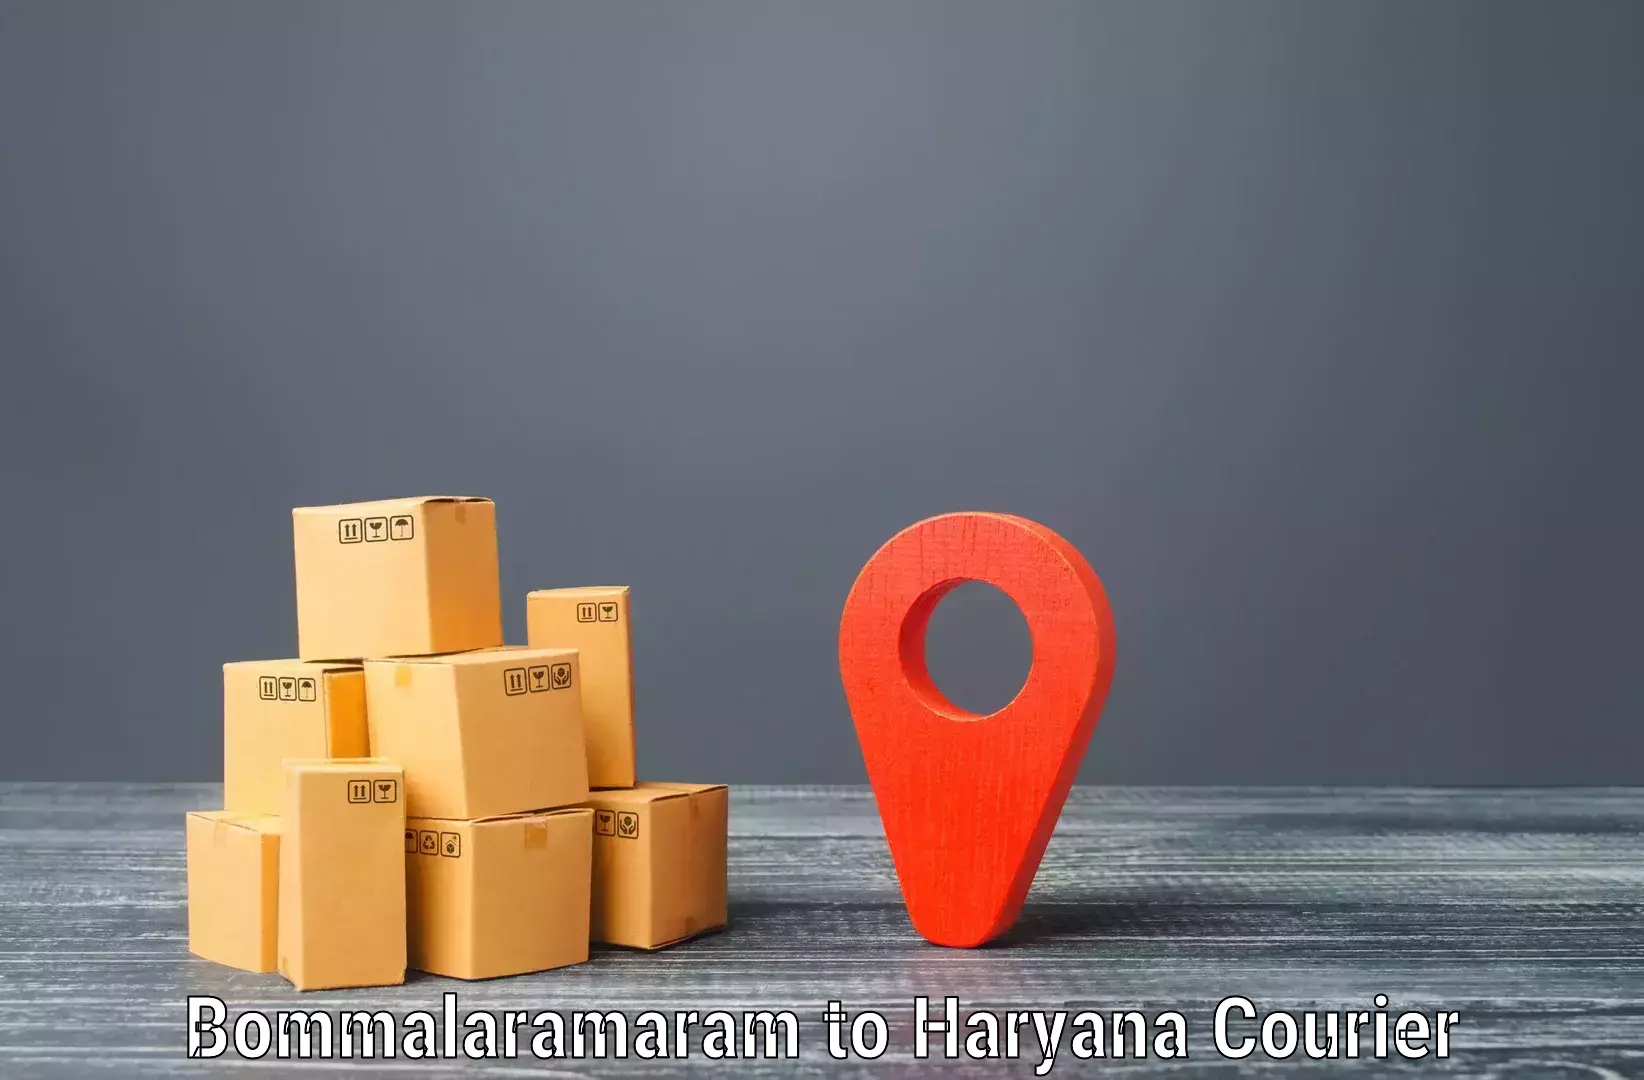 Comprehensive delivery network in Bommalaramaram to Gohana